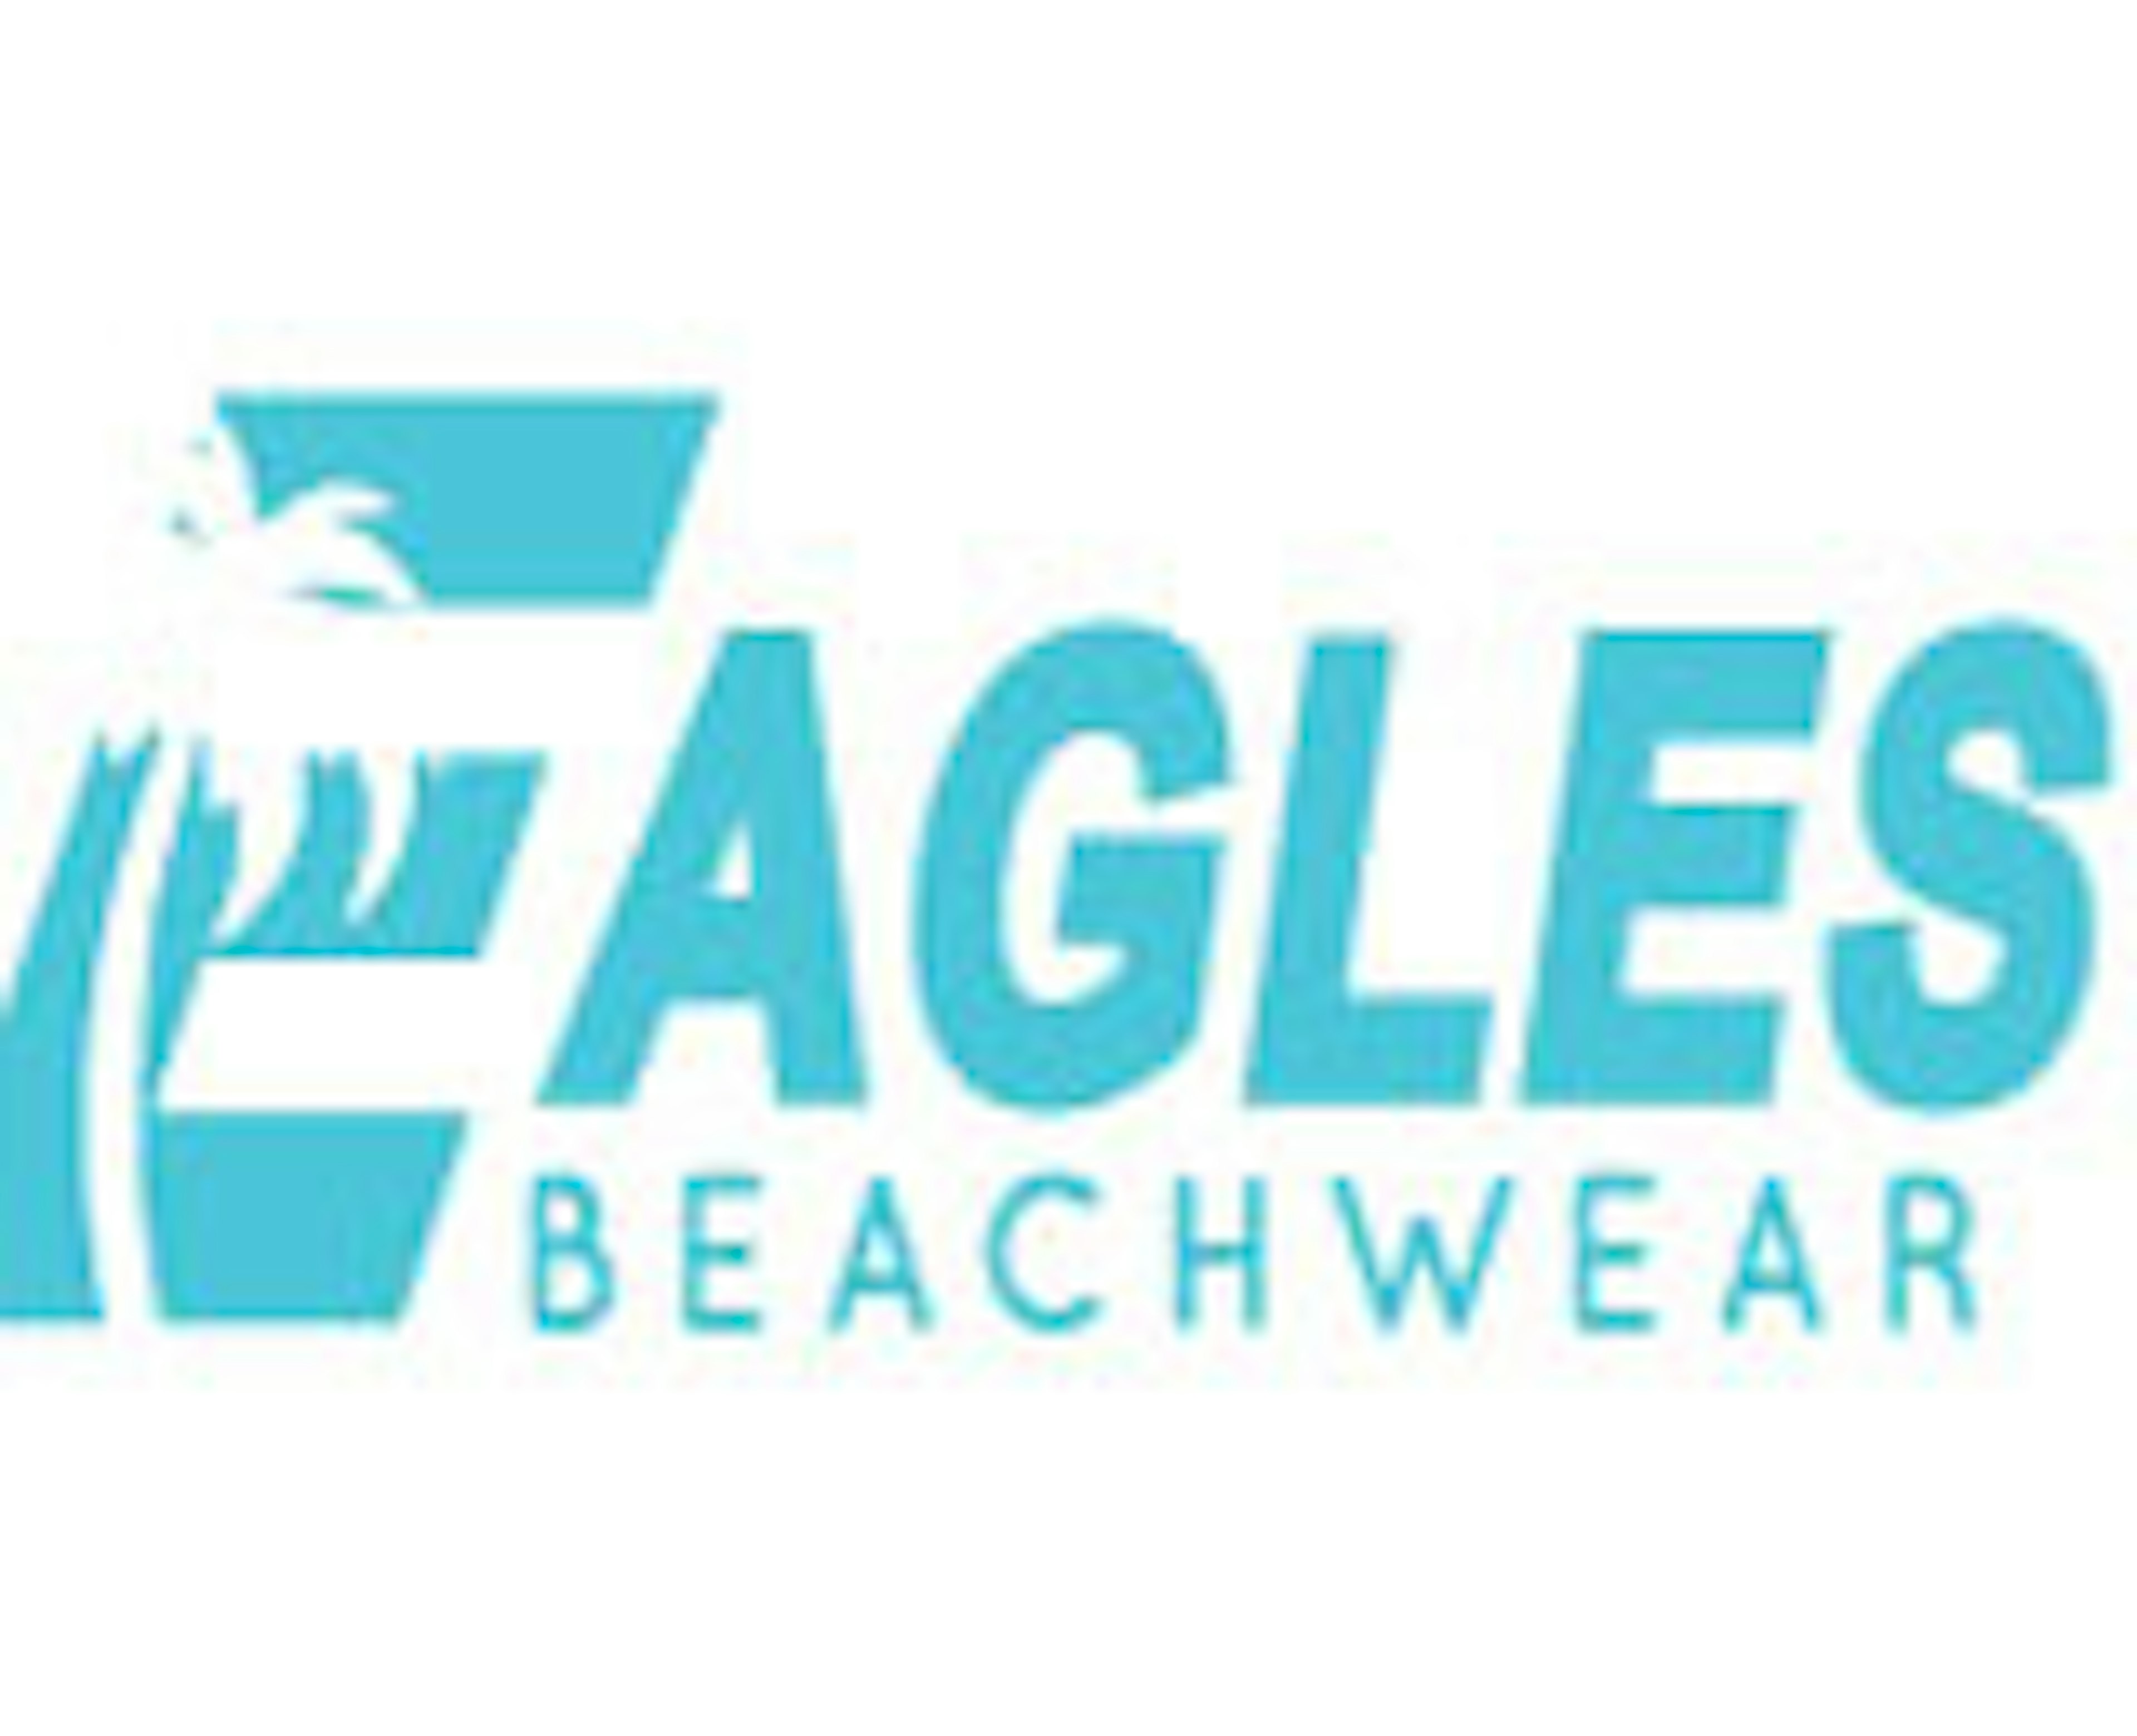 Eagles Beachwear